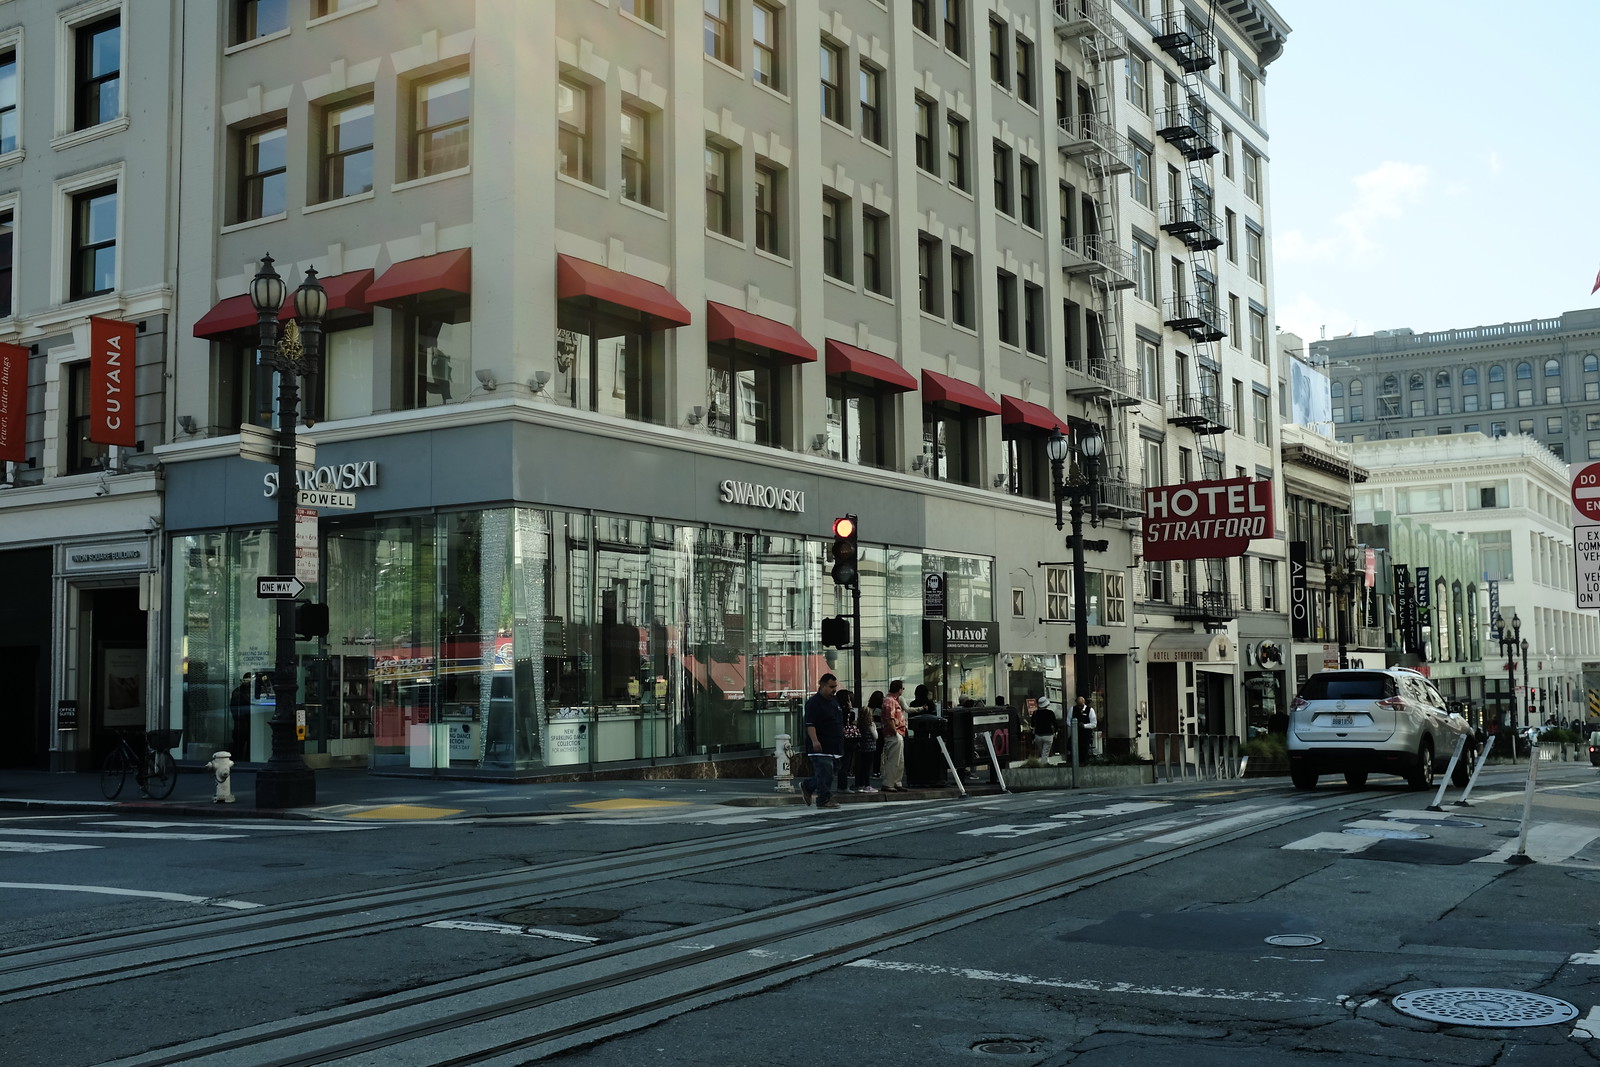 The San Francisco photo taken by FUJIFILM X100S